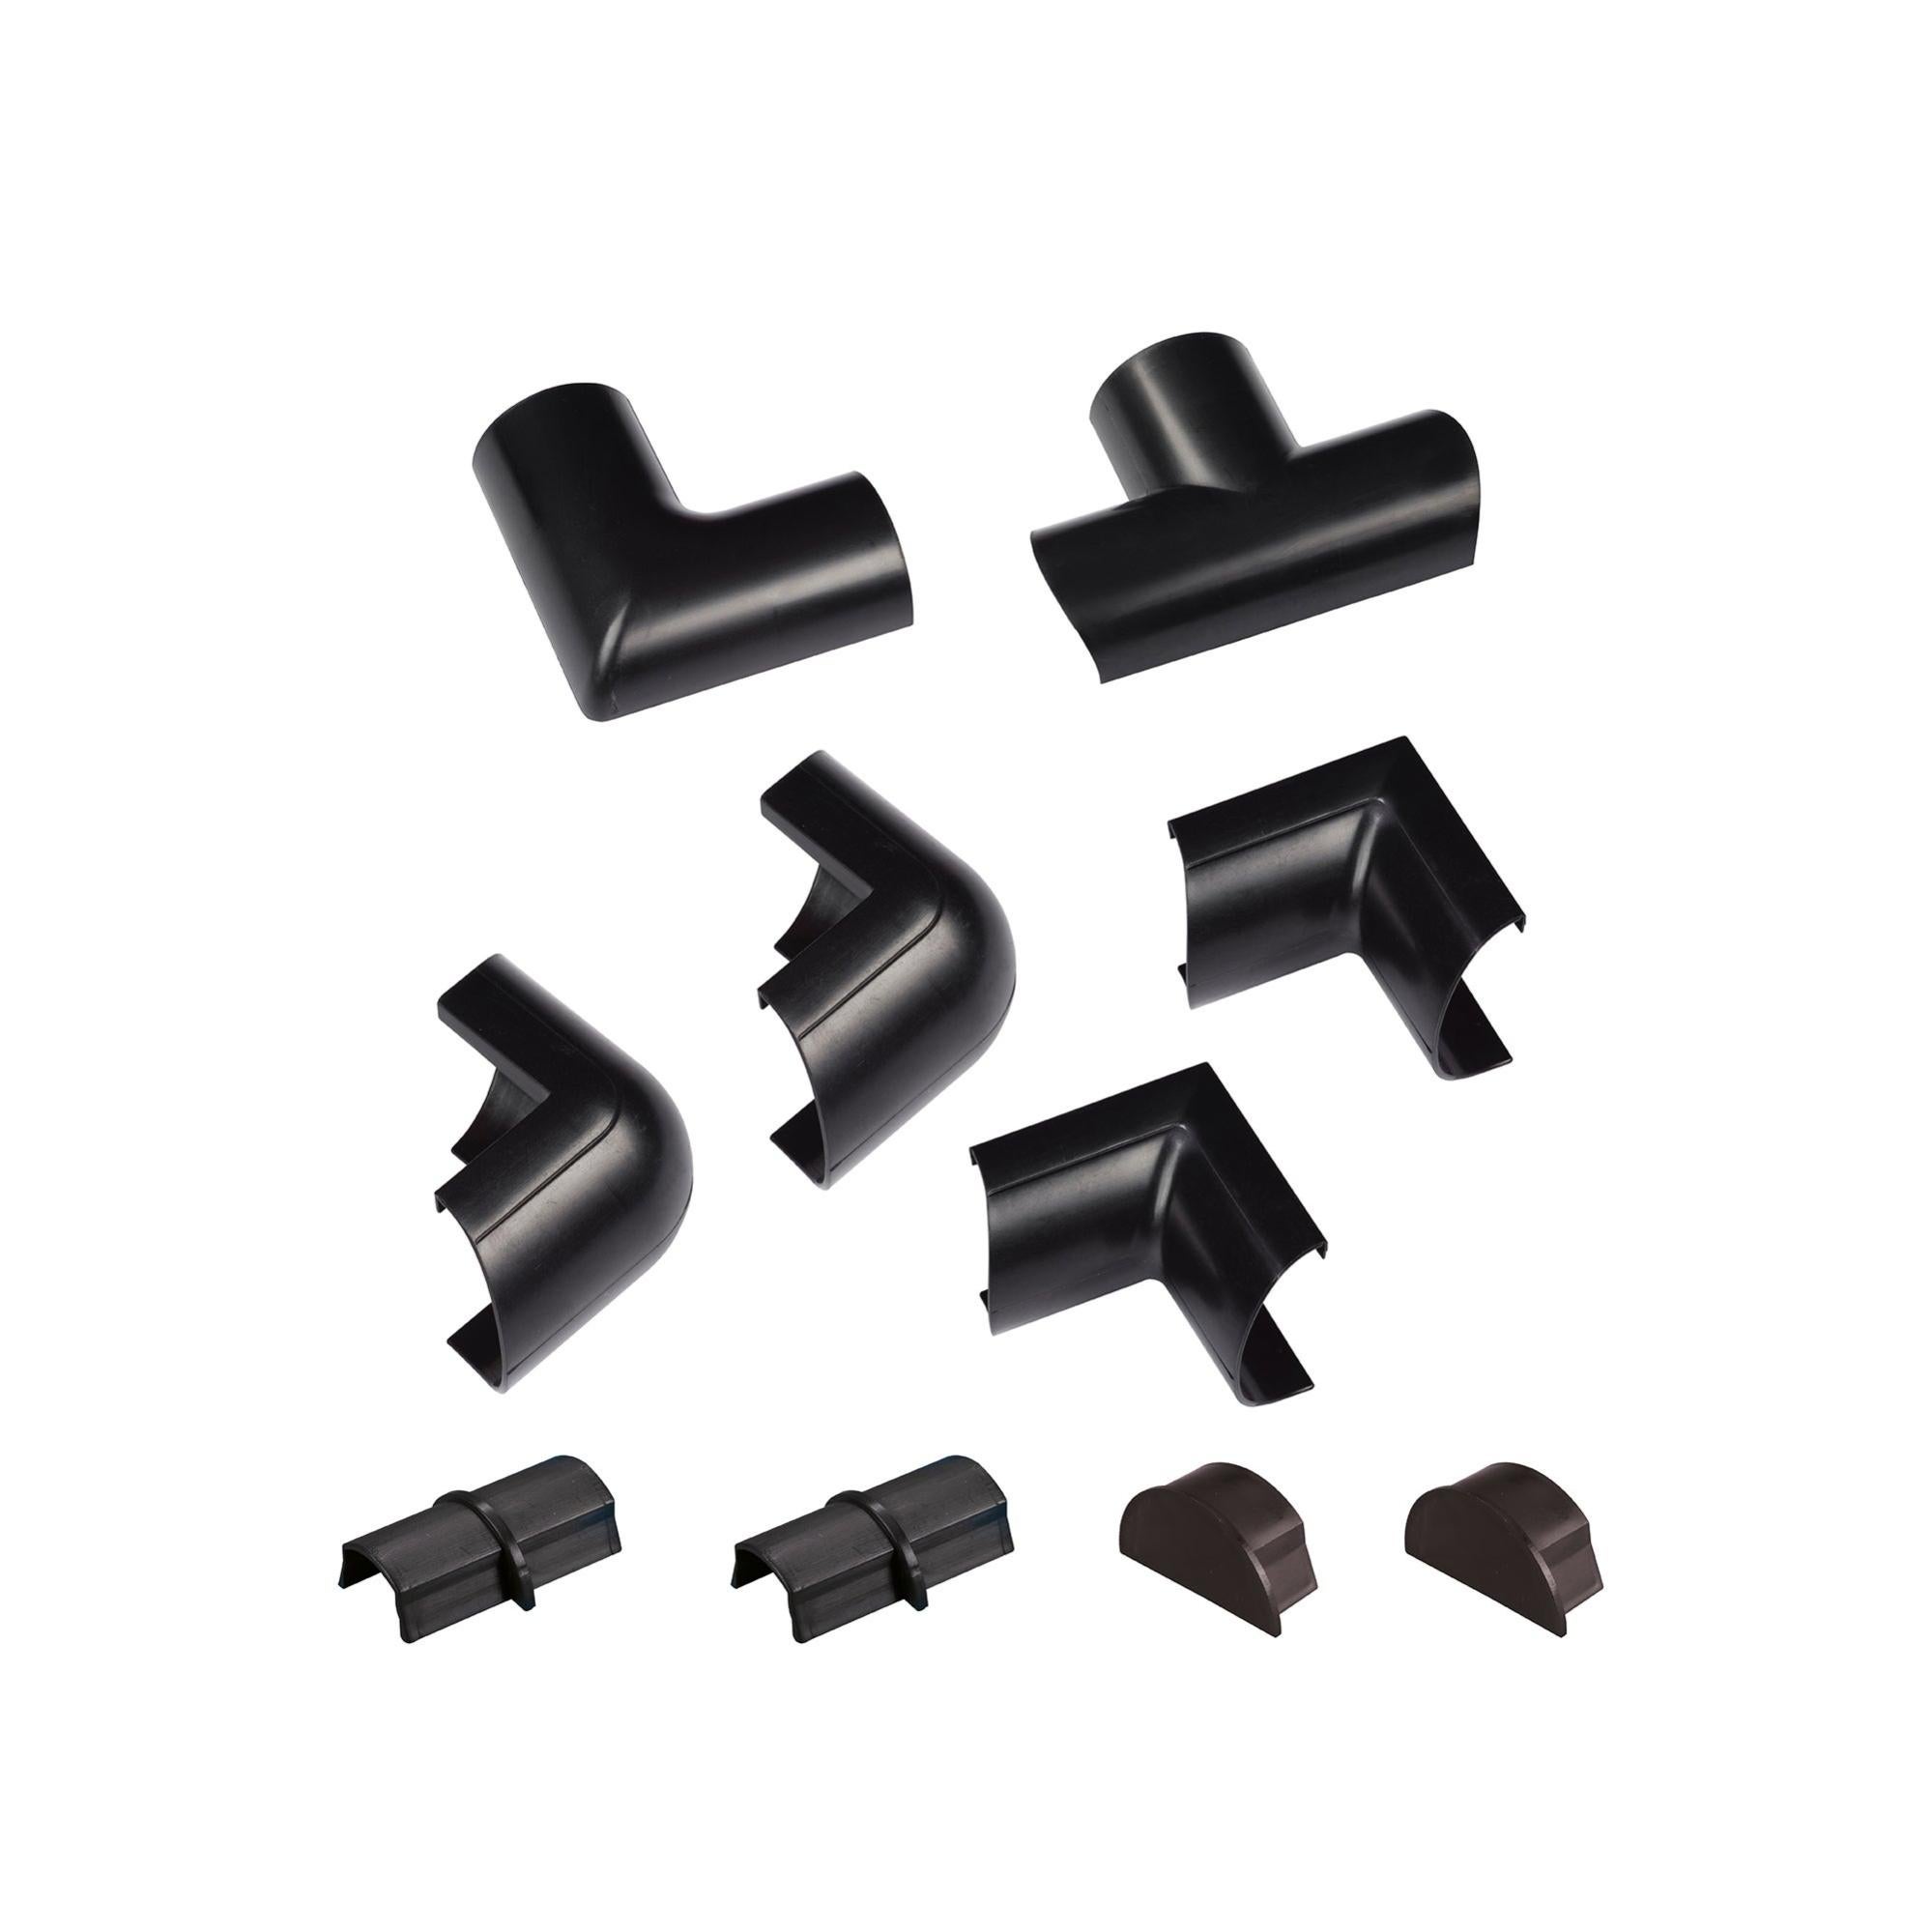 Kit accesorios canaleta decorativa d-line semicircular 30x15 color negro